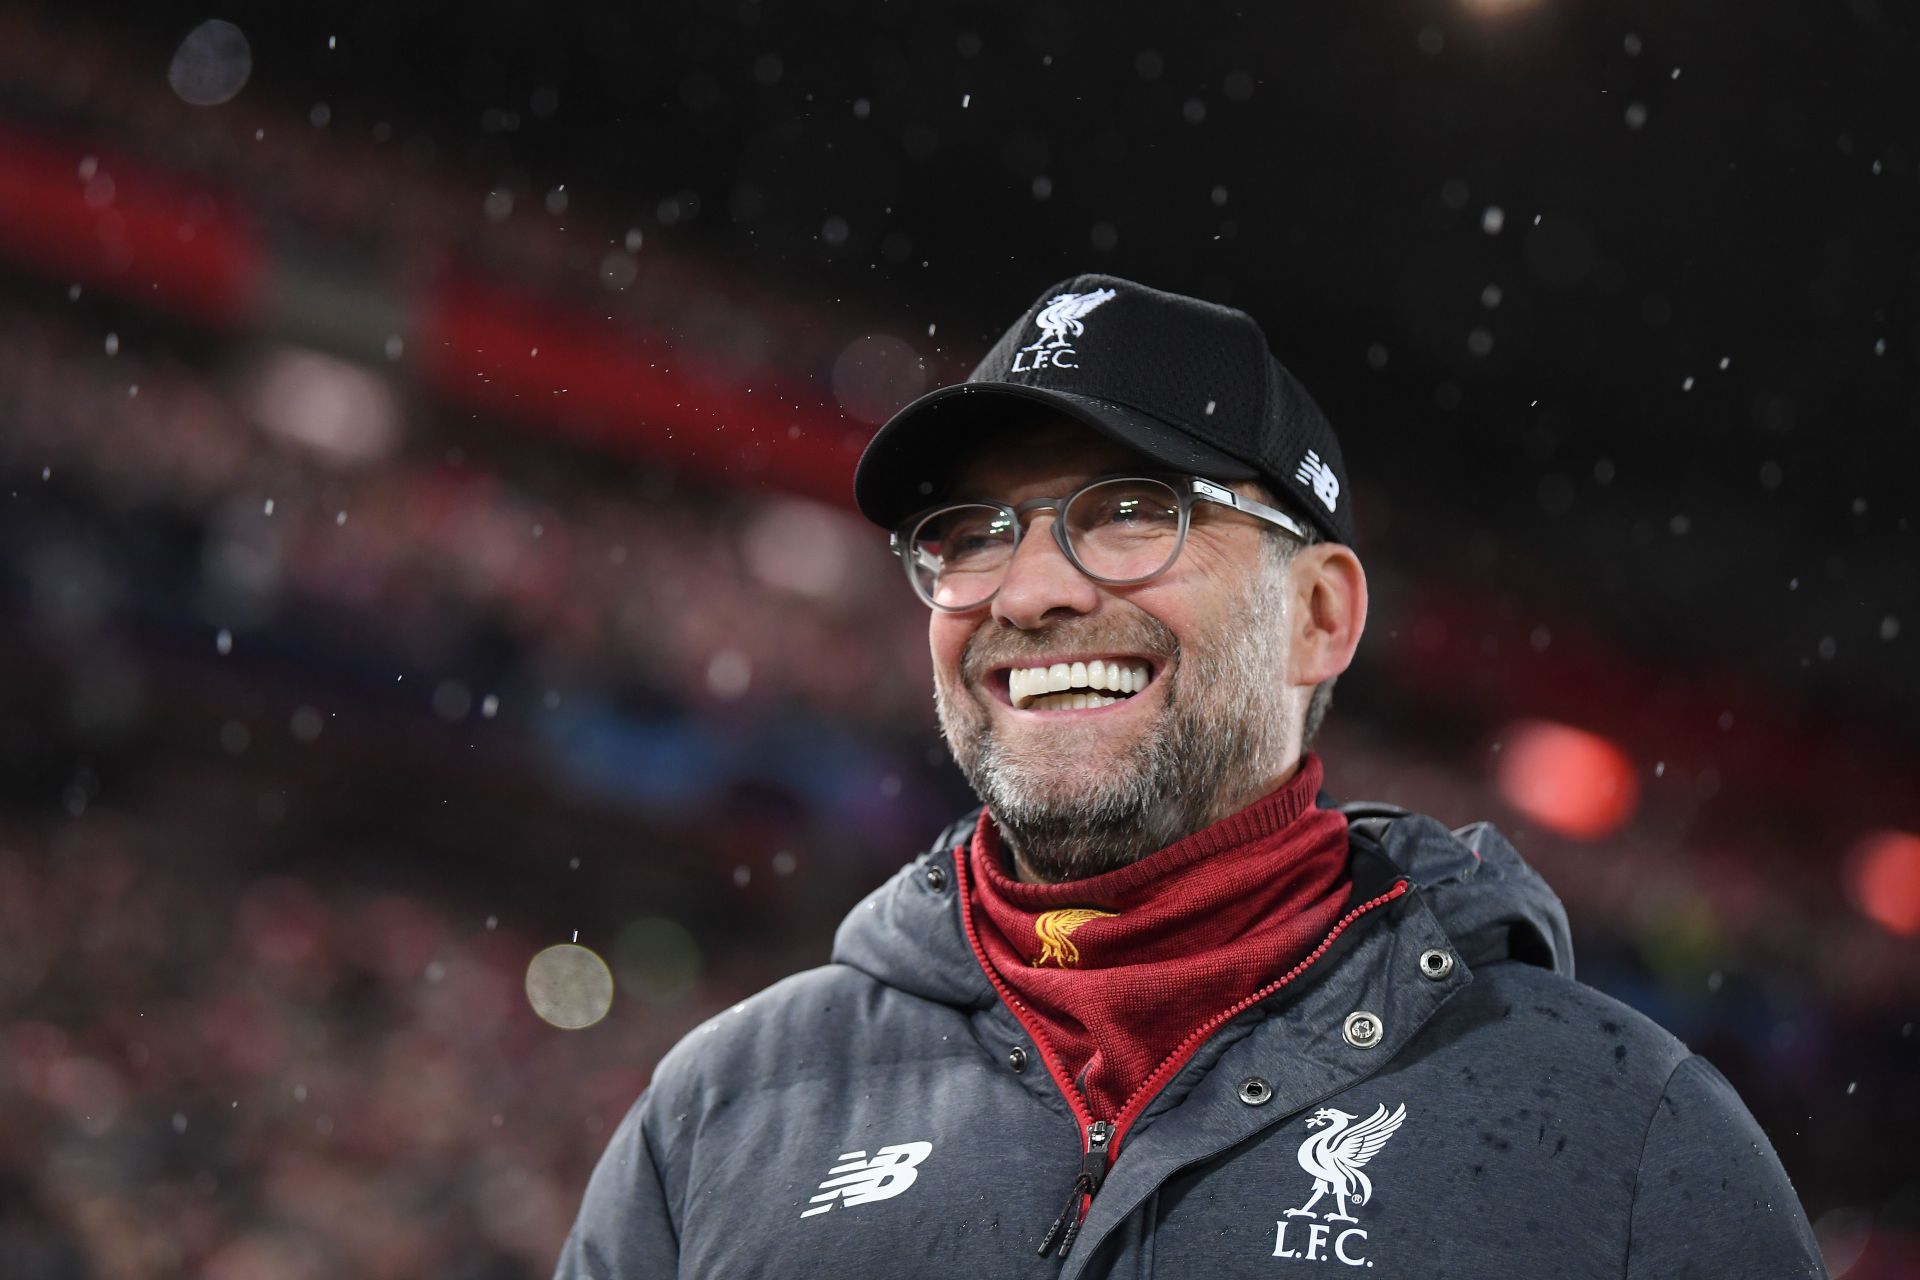 Jurgen Klopp is bringing success back to Liverpool